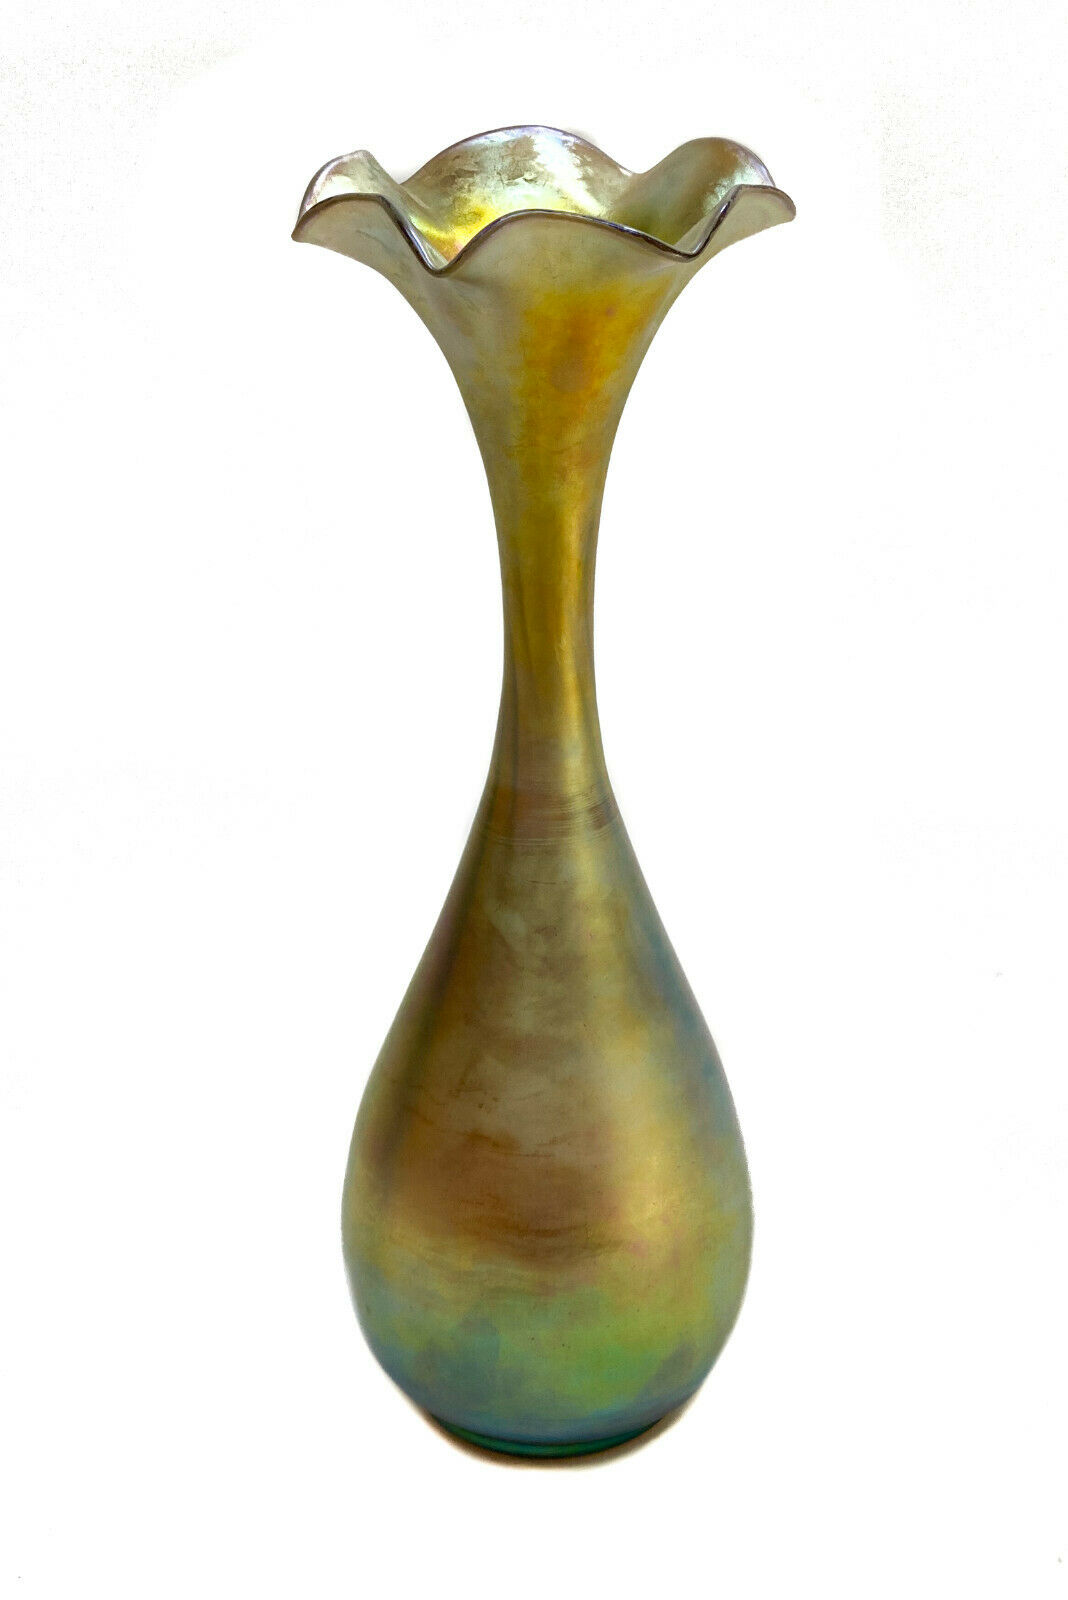 Steuben Iridescent Gold Green Aurene Glass Vase, Early 20th Century